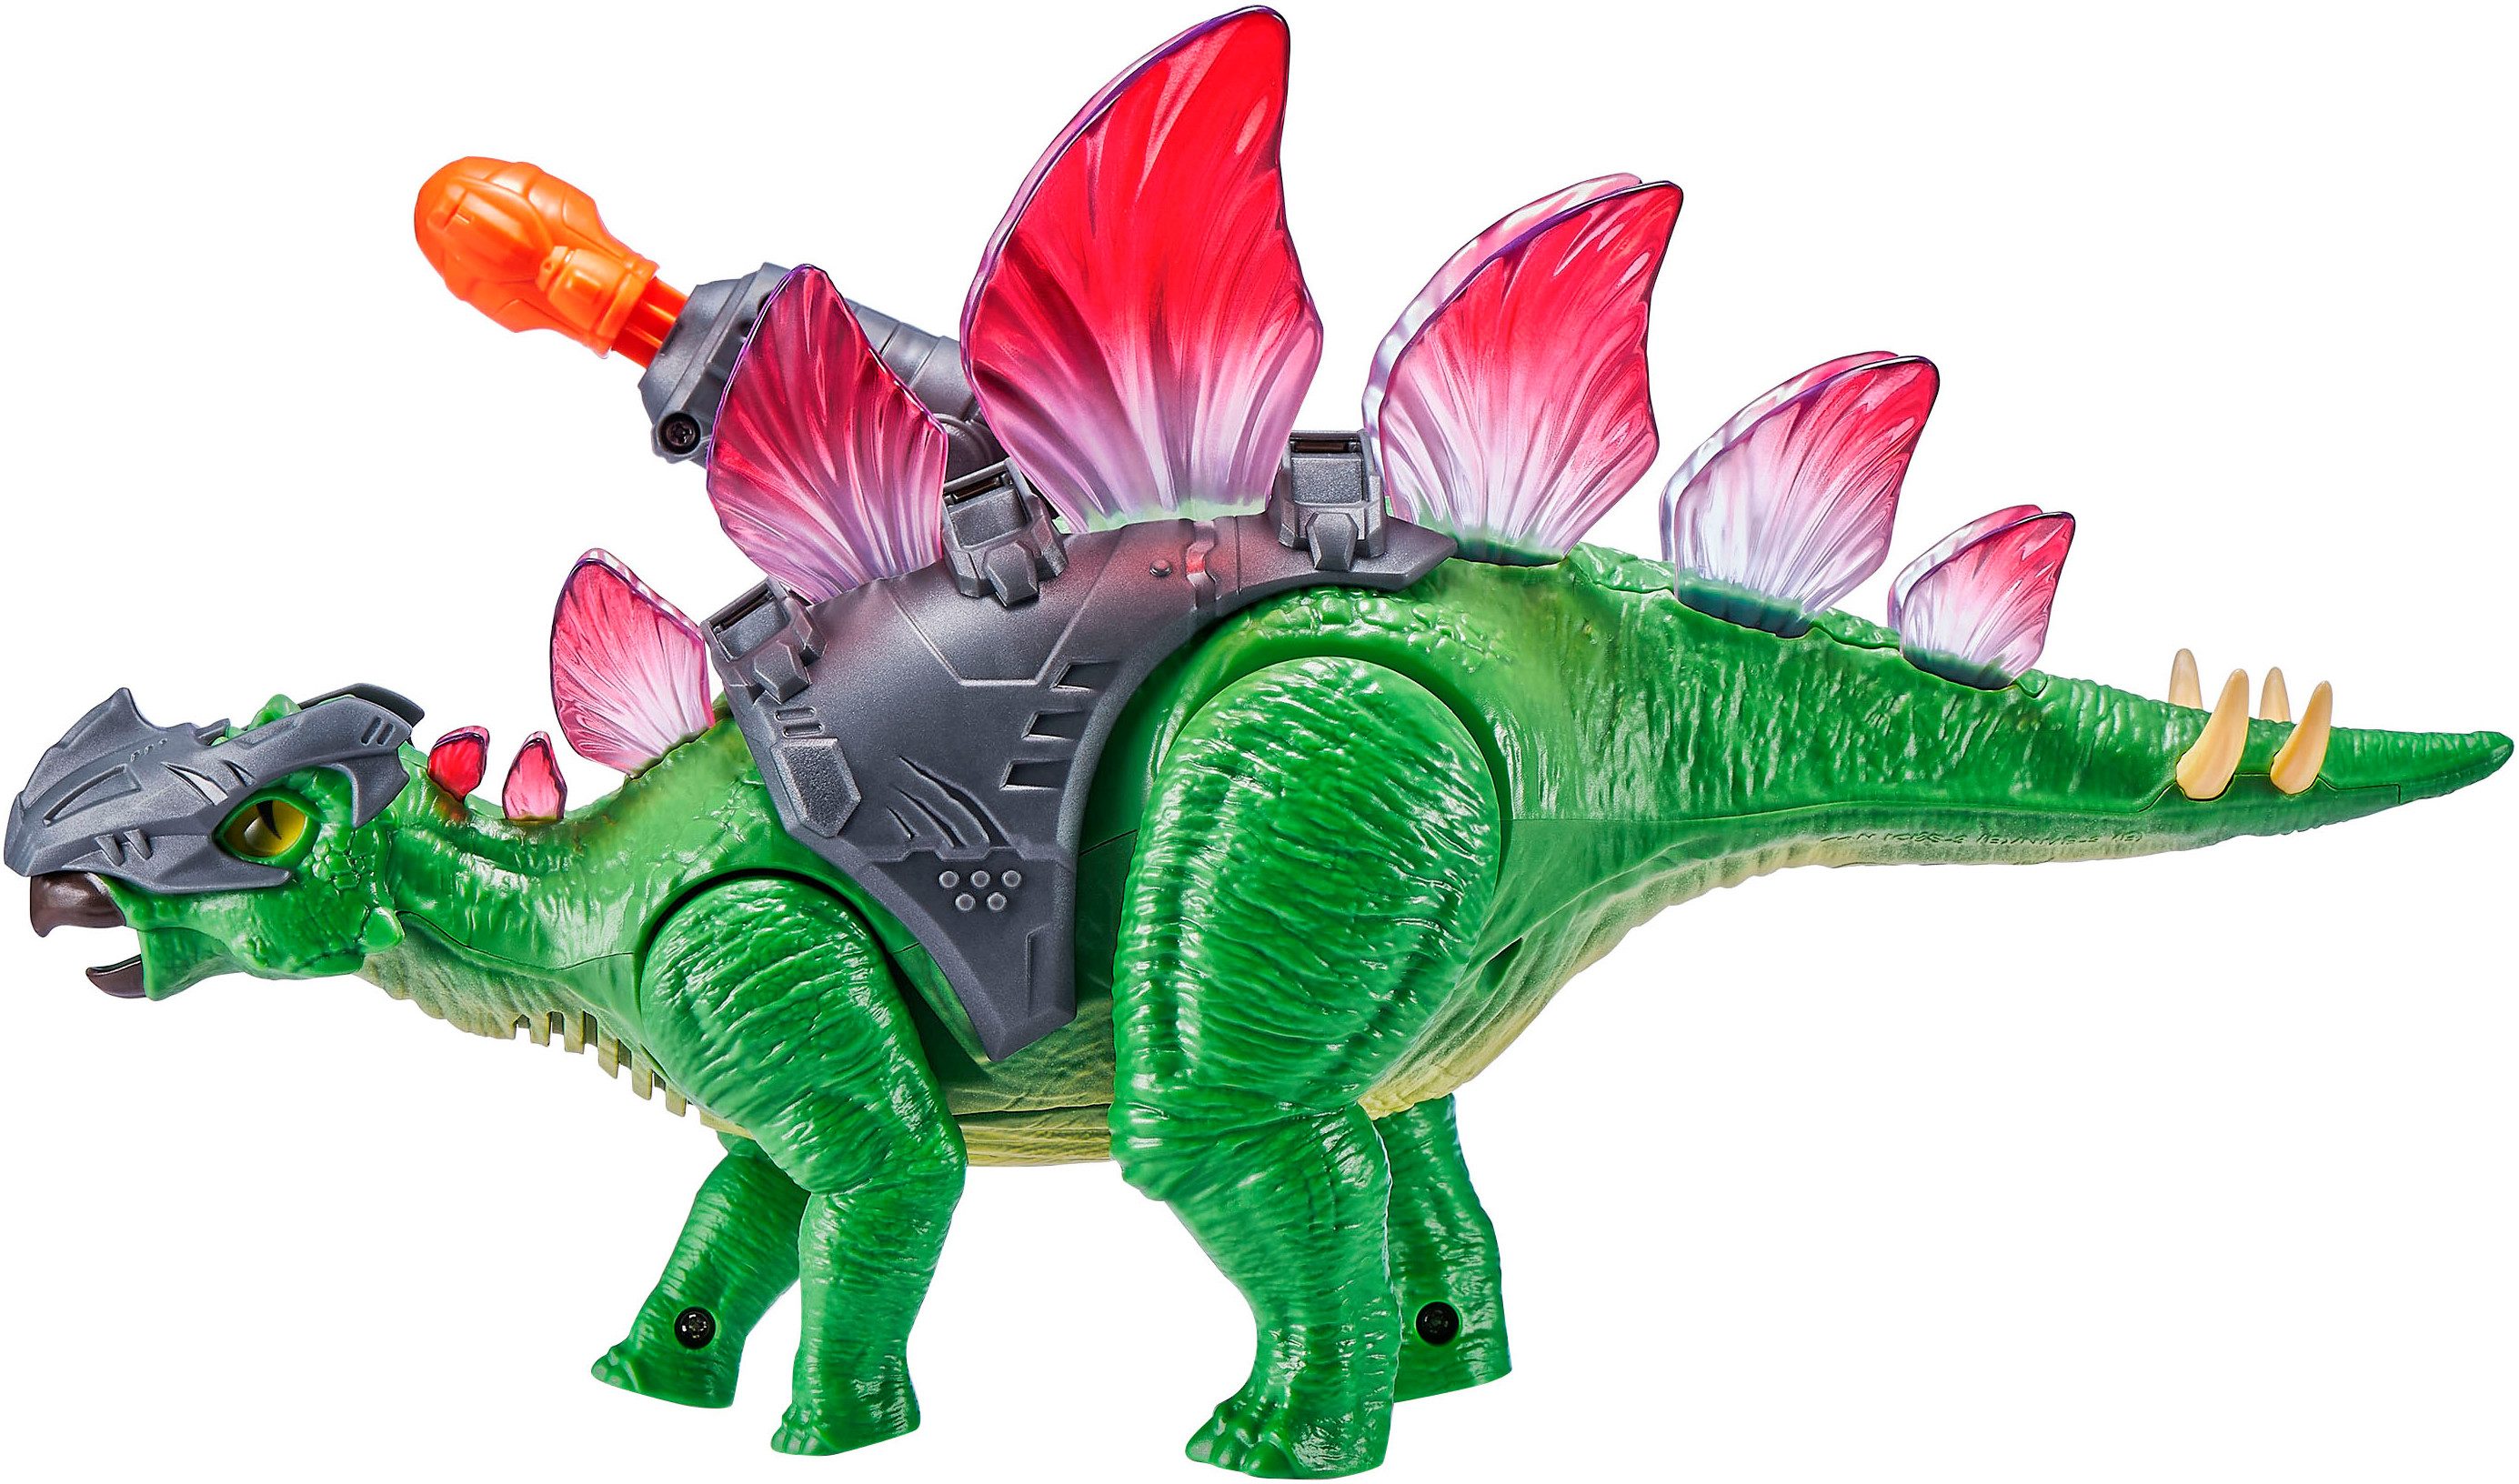 Robotertier Robo Alive, Dino Wars Dinosaurier Stegosaurus Serie 1, mit Funktionen